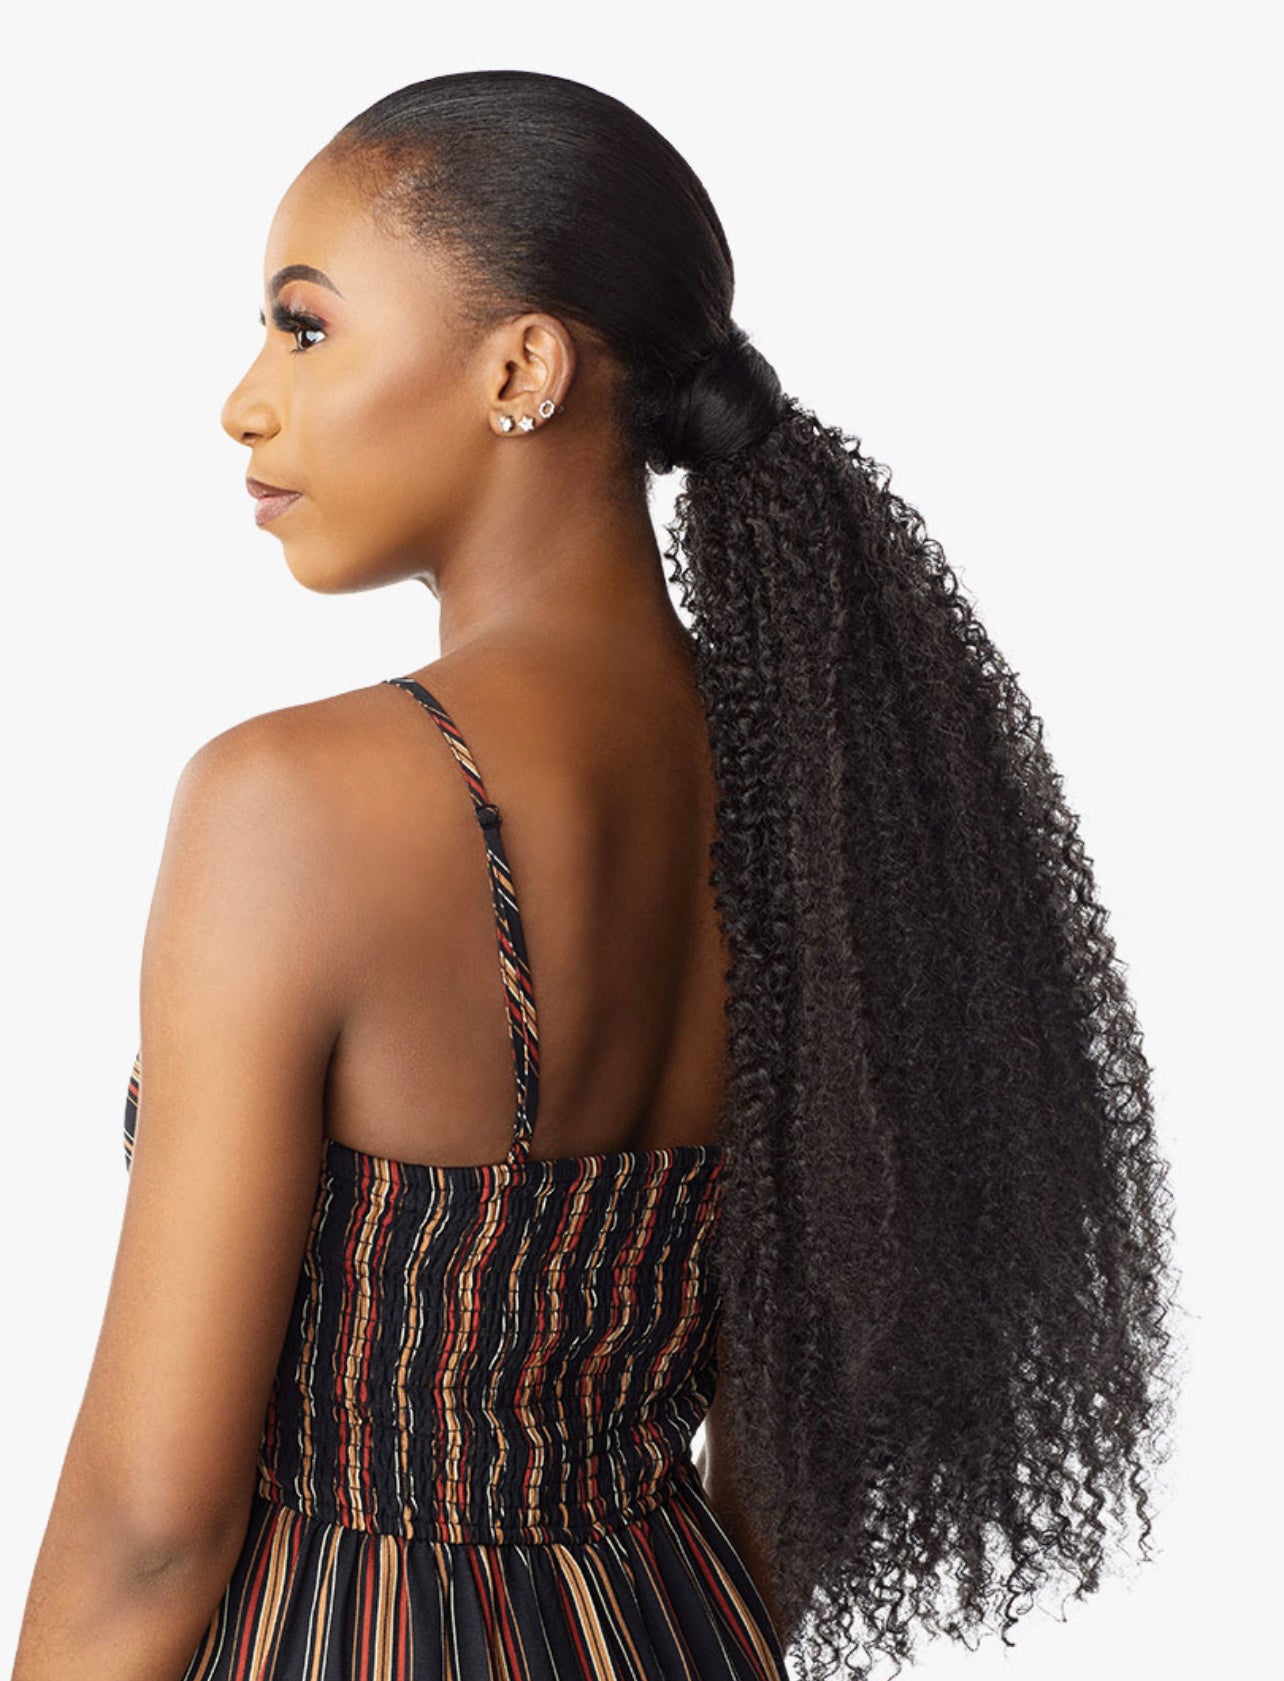 Sensationnel Instant kinky curly 24” ponytail